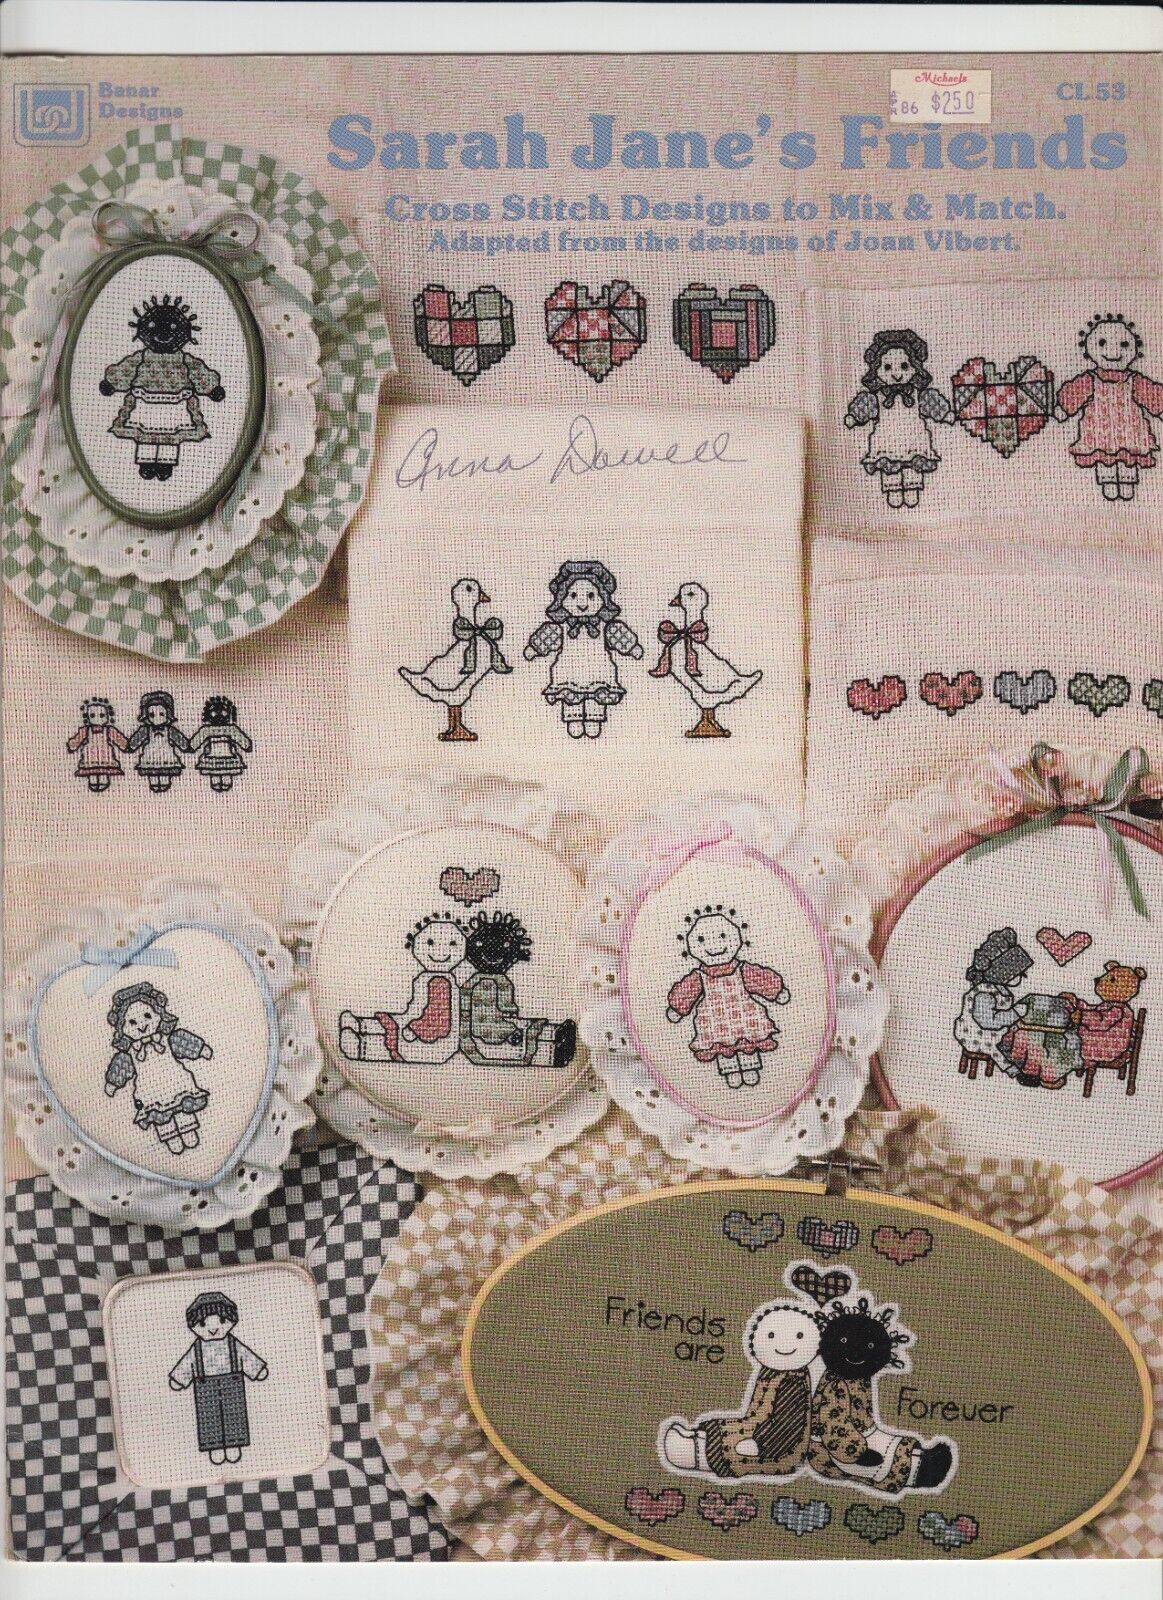 Primary image for Sarah Jane's Friends Cross Stitch Pattern Booklet CL53 Banar Designs Joan Vibert